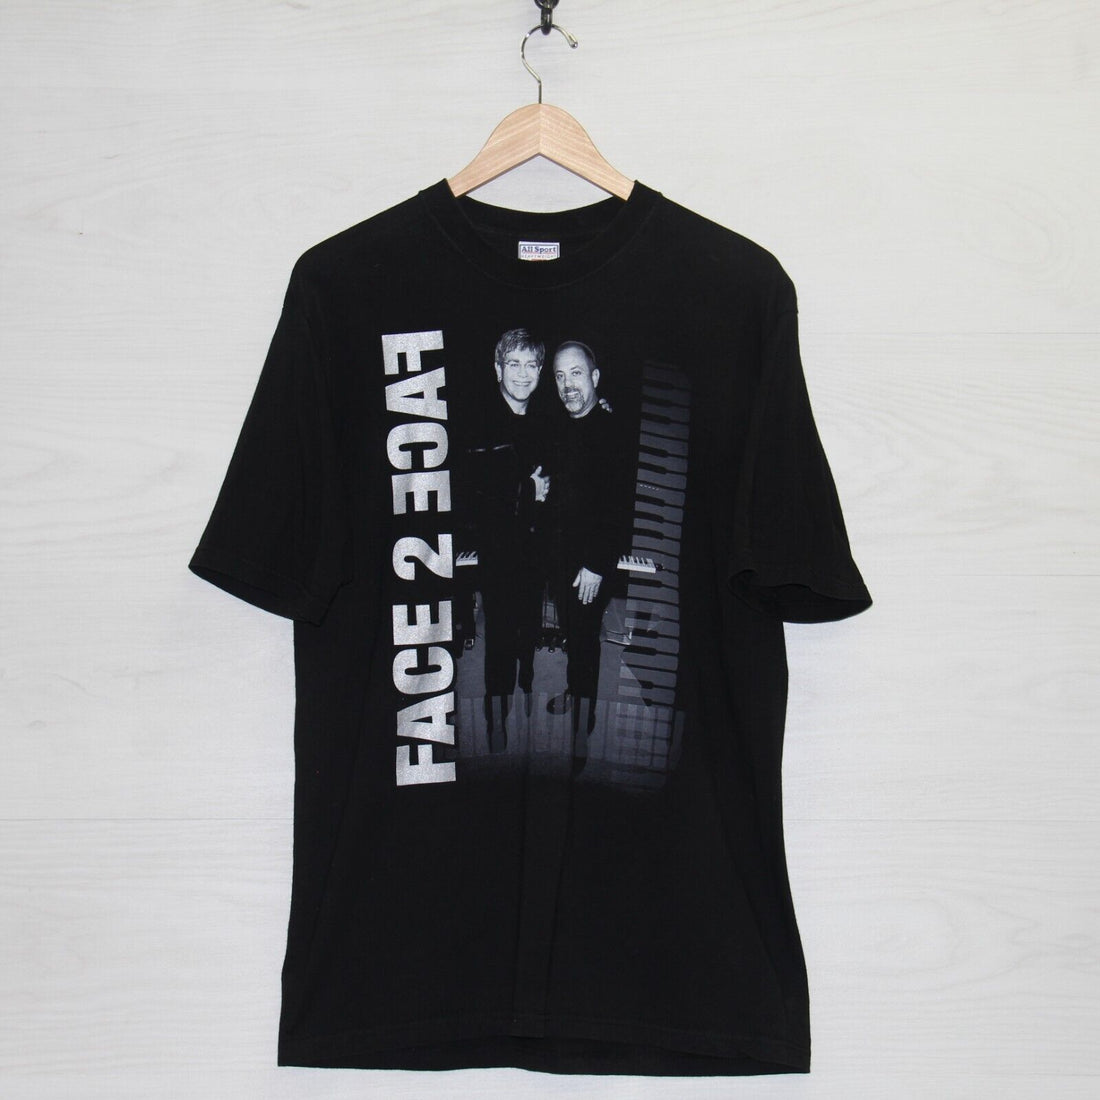 Vintage Elton John Billy Joel Face 2 Face Tour T-Shirt Size Large 2002 Music